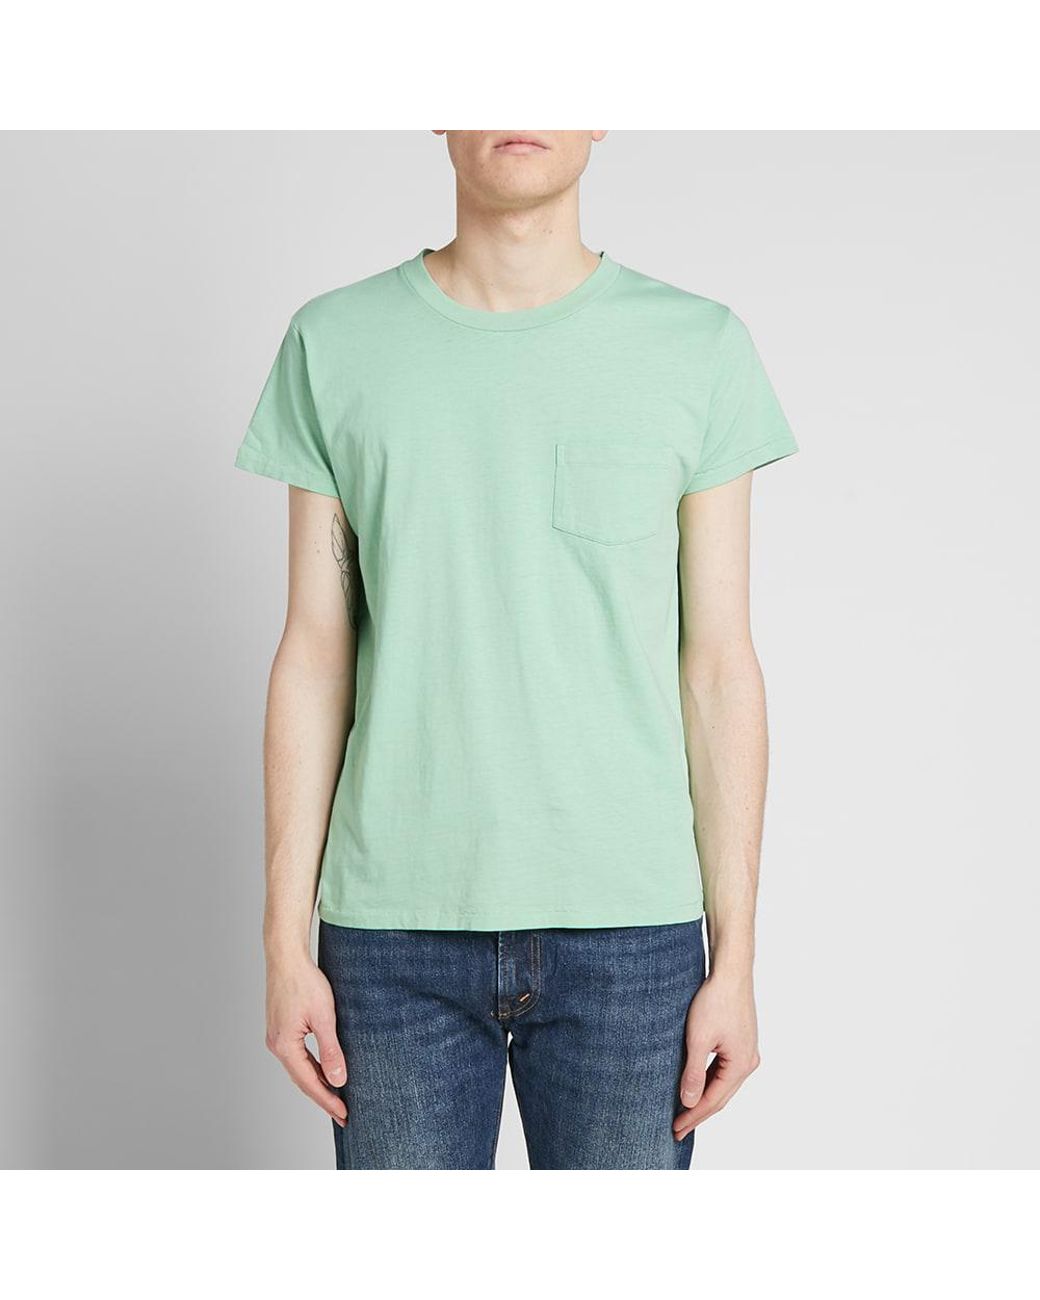 LEVI'S VINTAGE CLOTHING 1950's Tab Twills Shirt (Green Fade